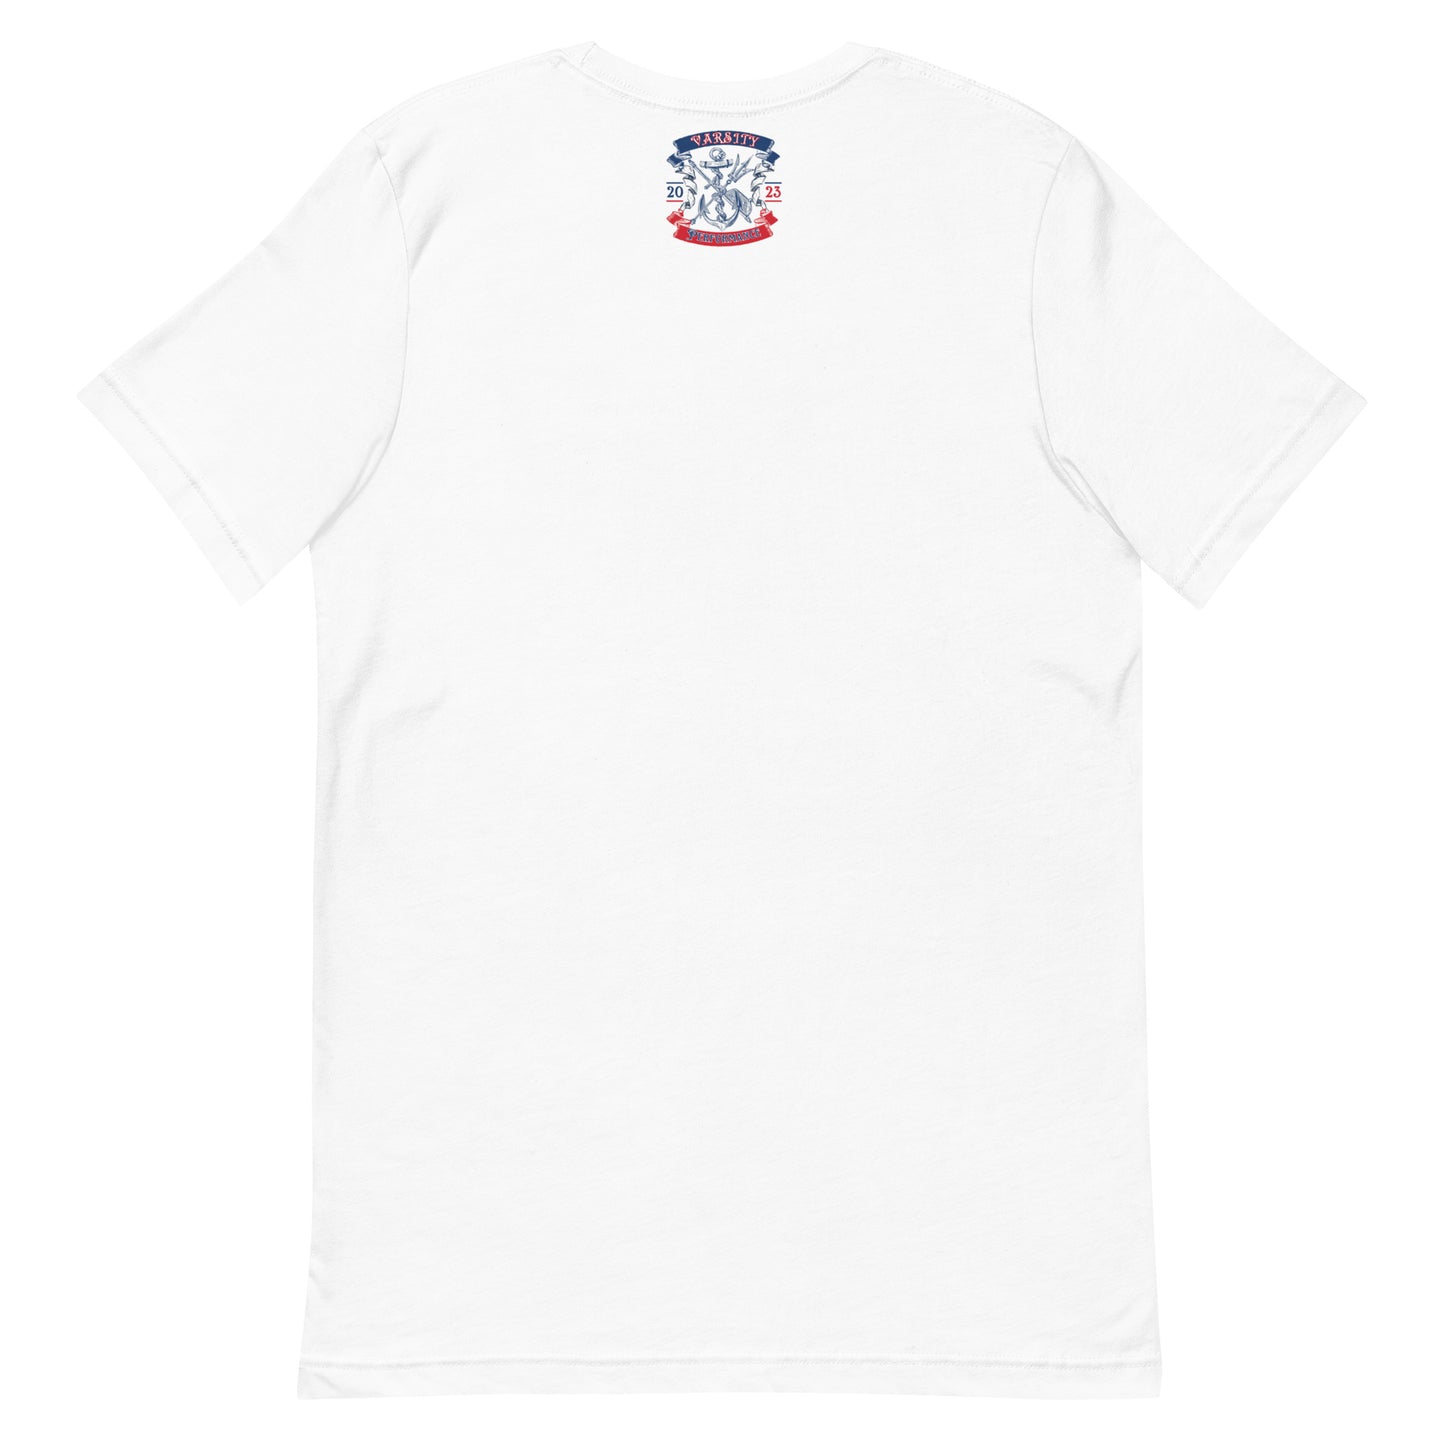 VPN Unisex Sailors t-shirt